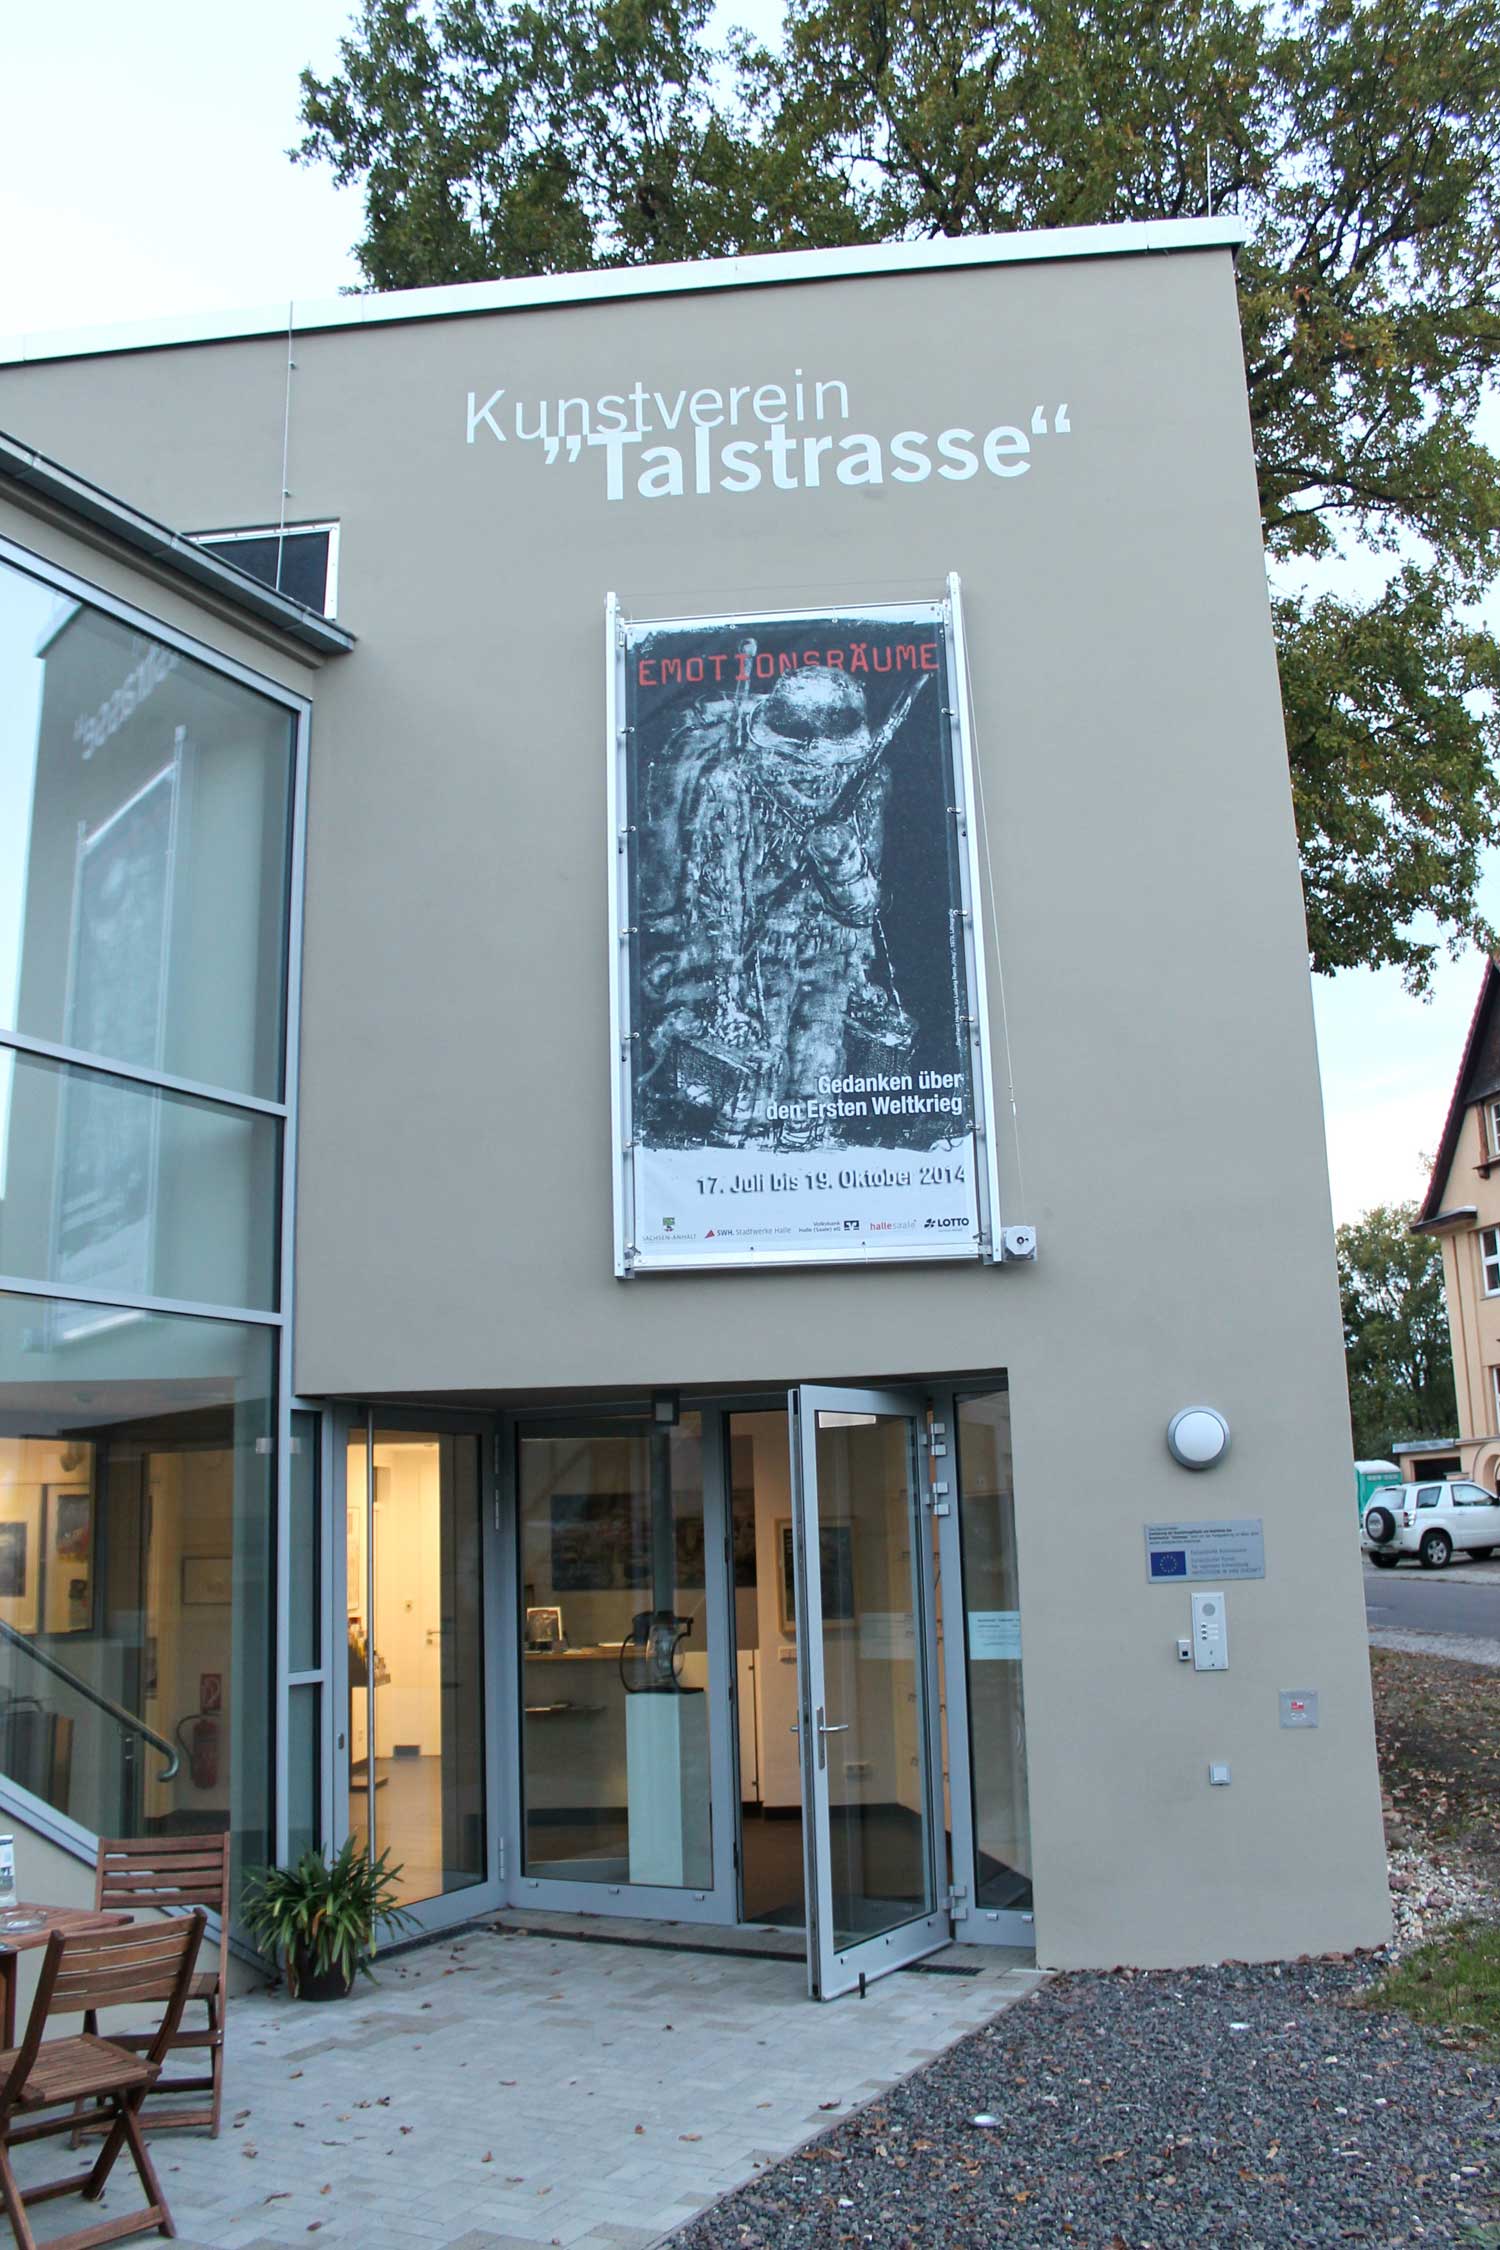 Kunsthalle "Talstrasse"